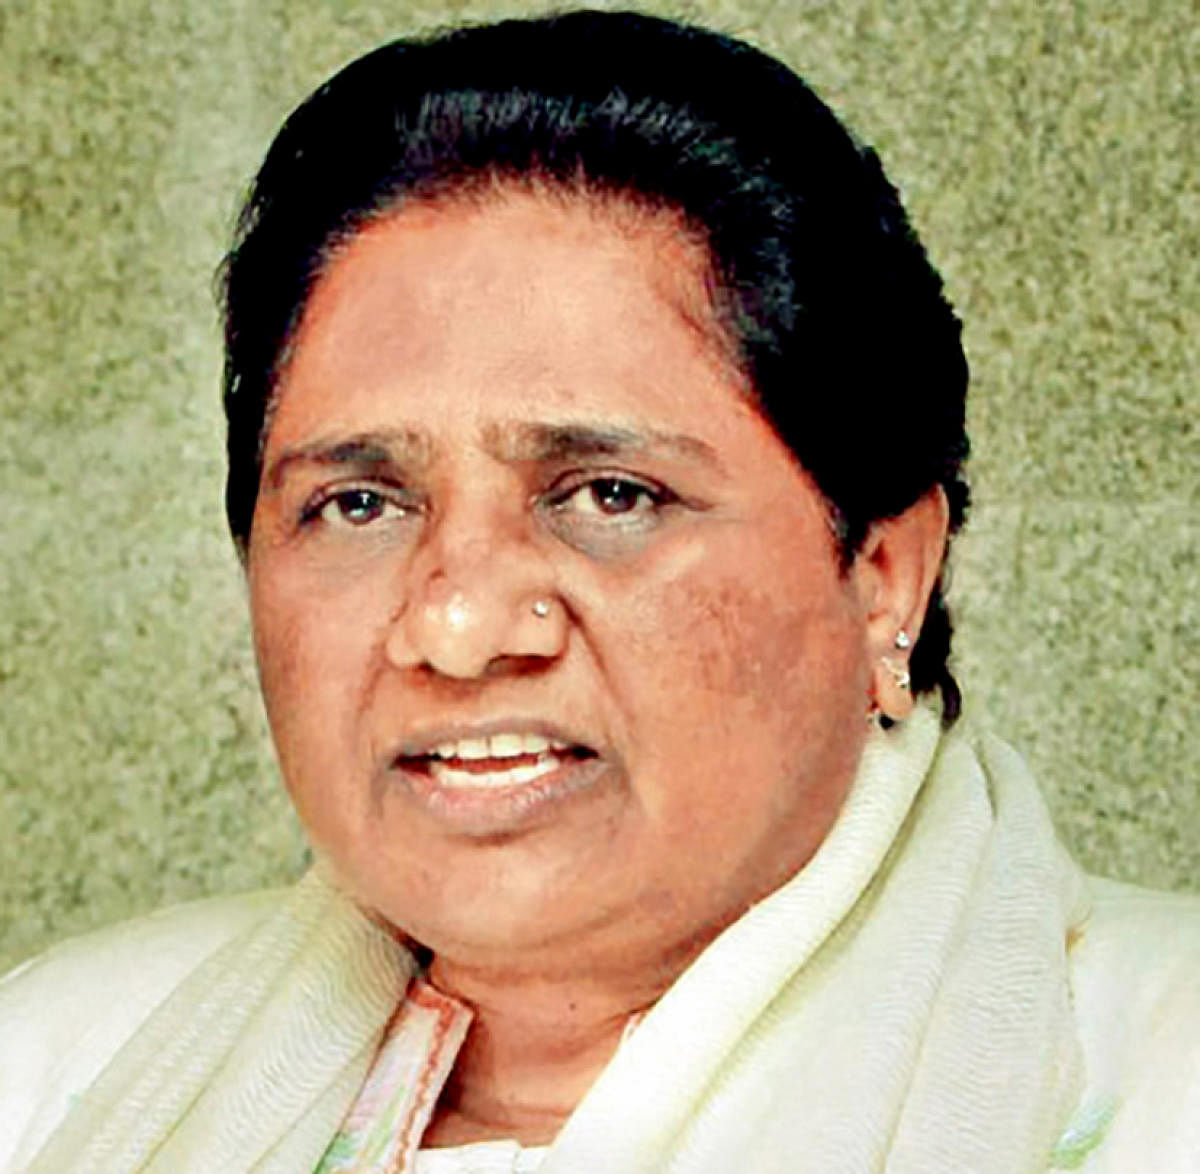 BSP chief Mayawati (File Photo)